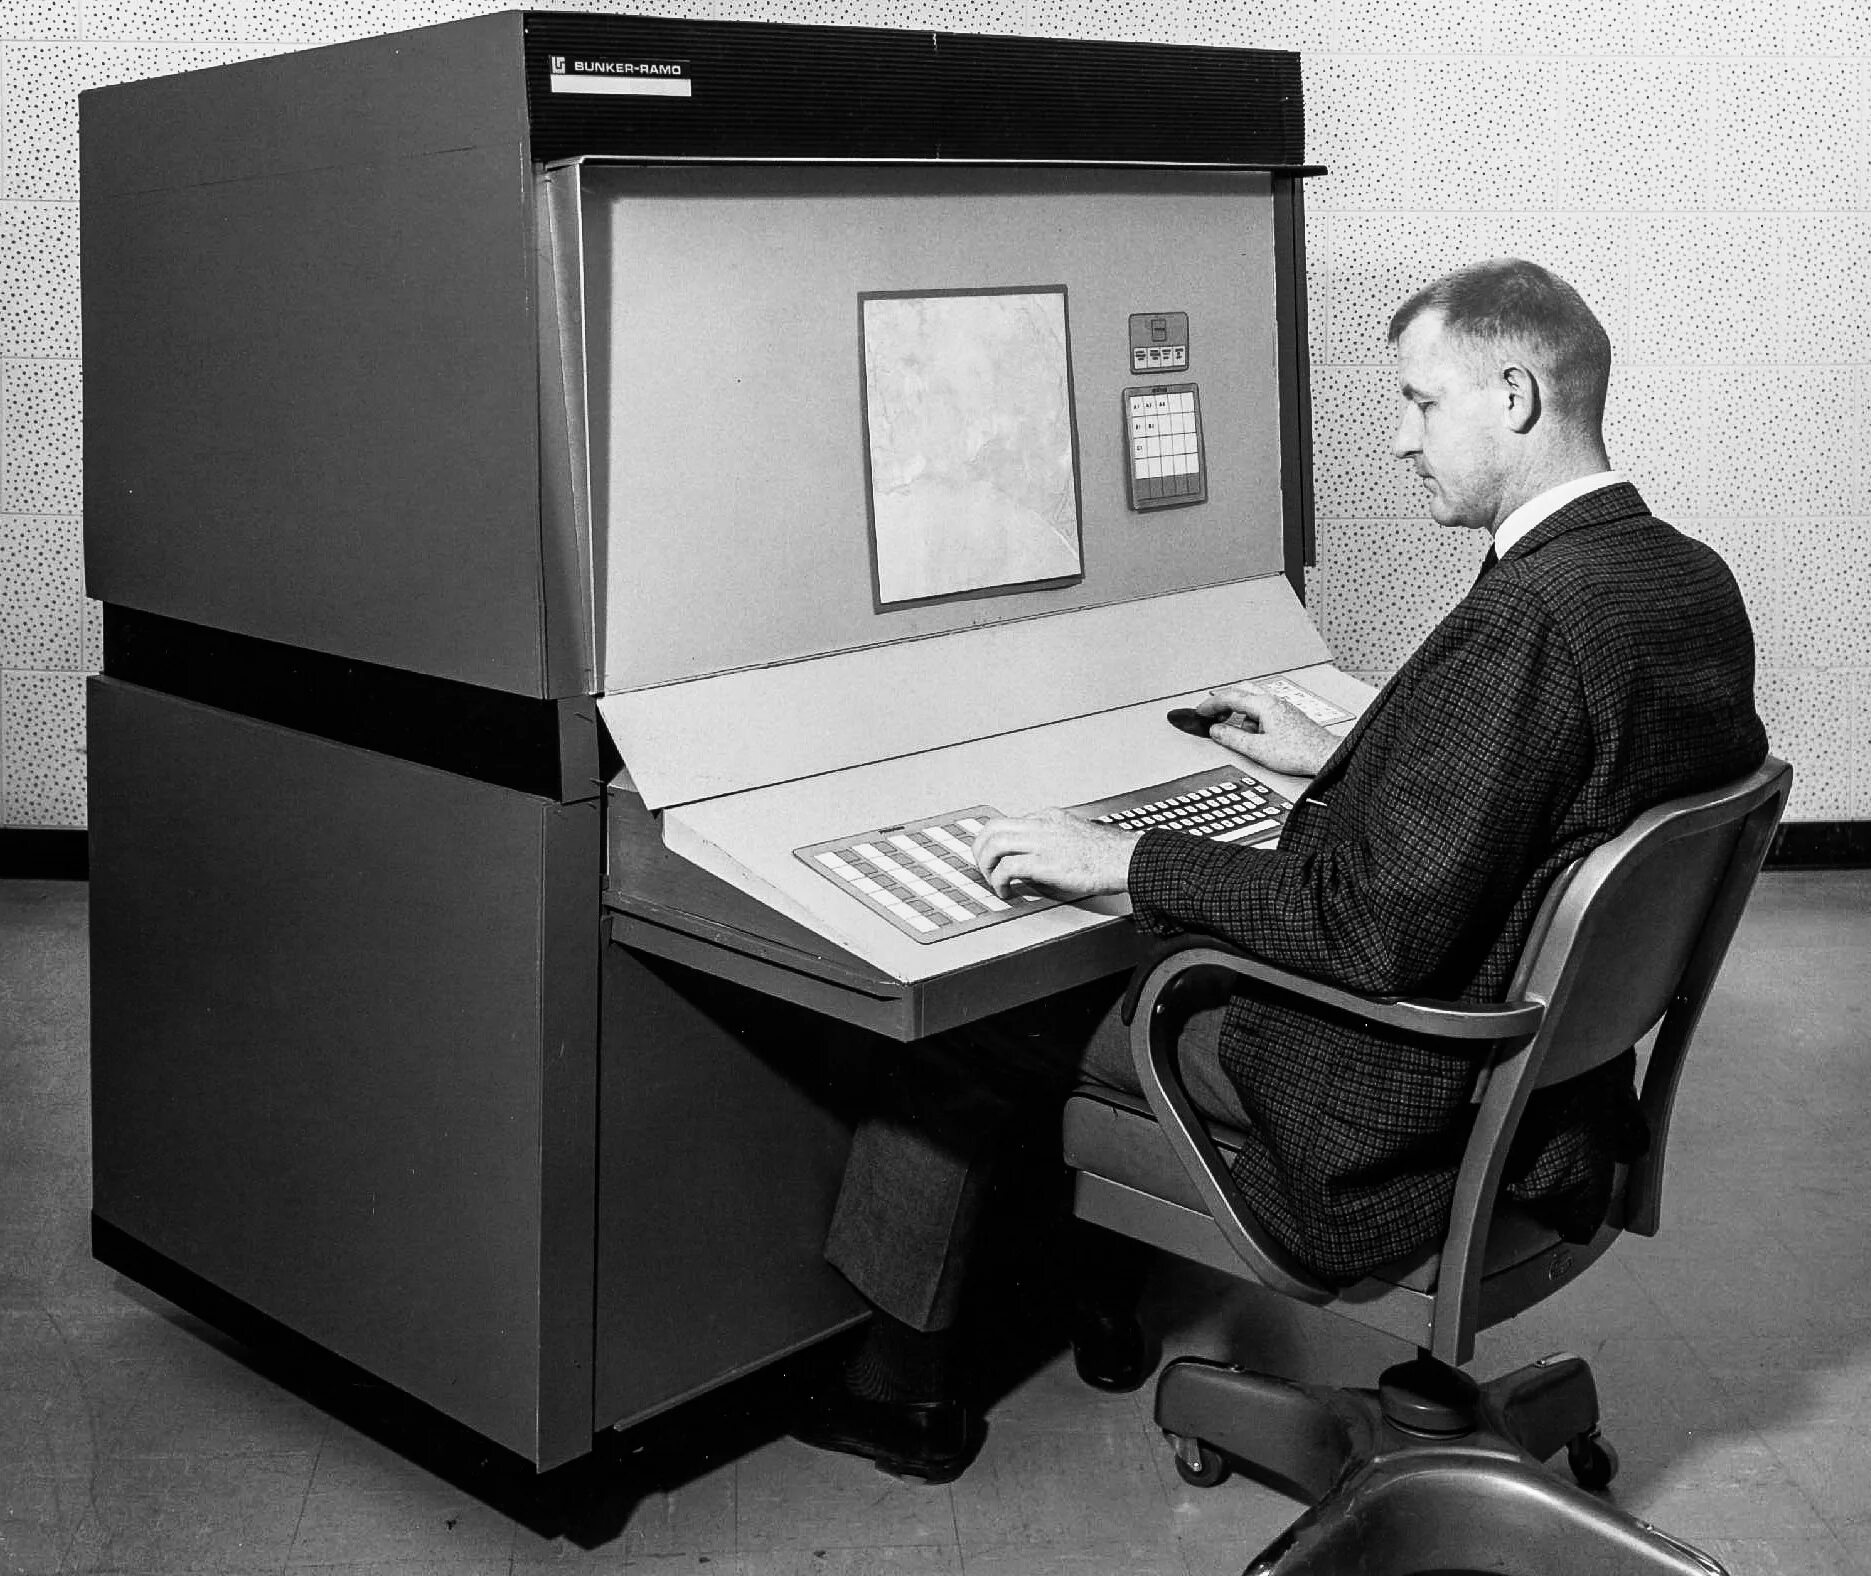 Следующий компьютер. Компьютер. Первые компьютерные системы. Первый компьютер. Тяжелый компьютер.